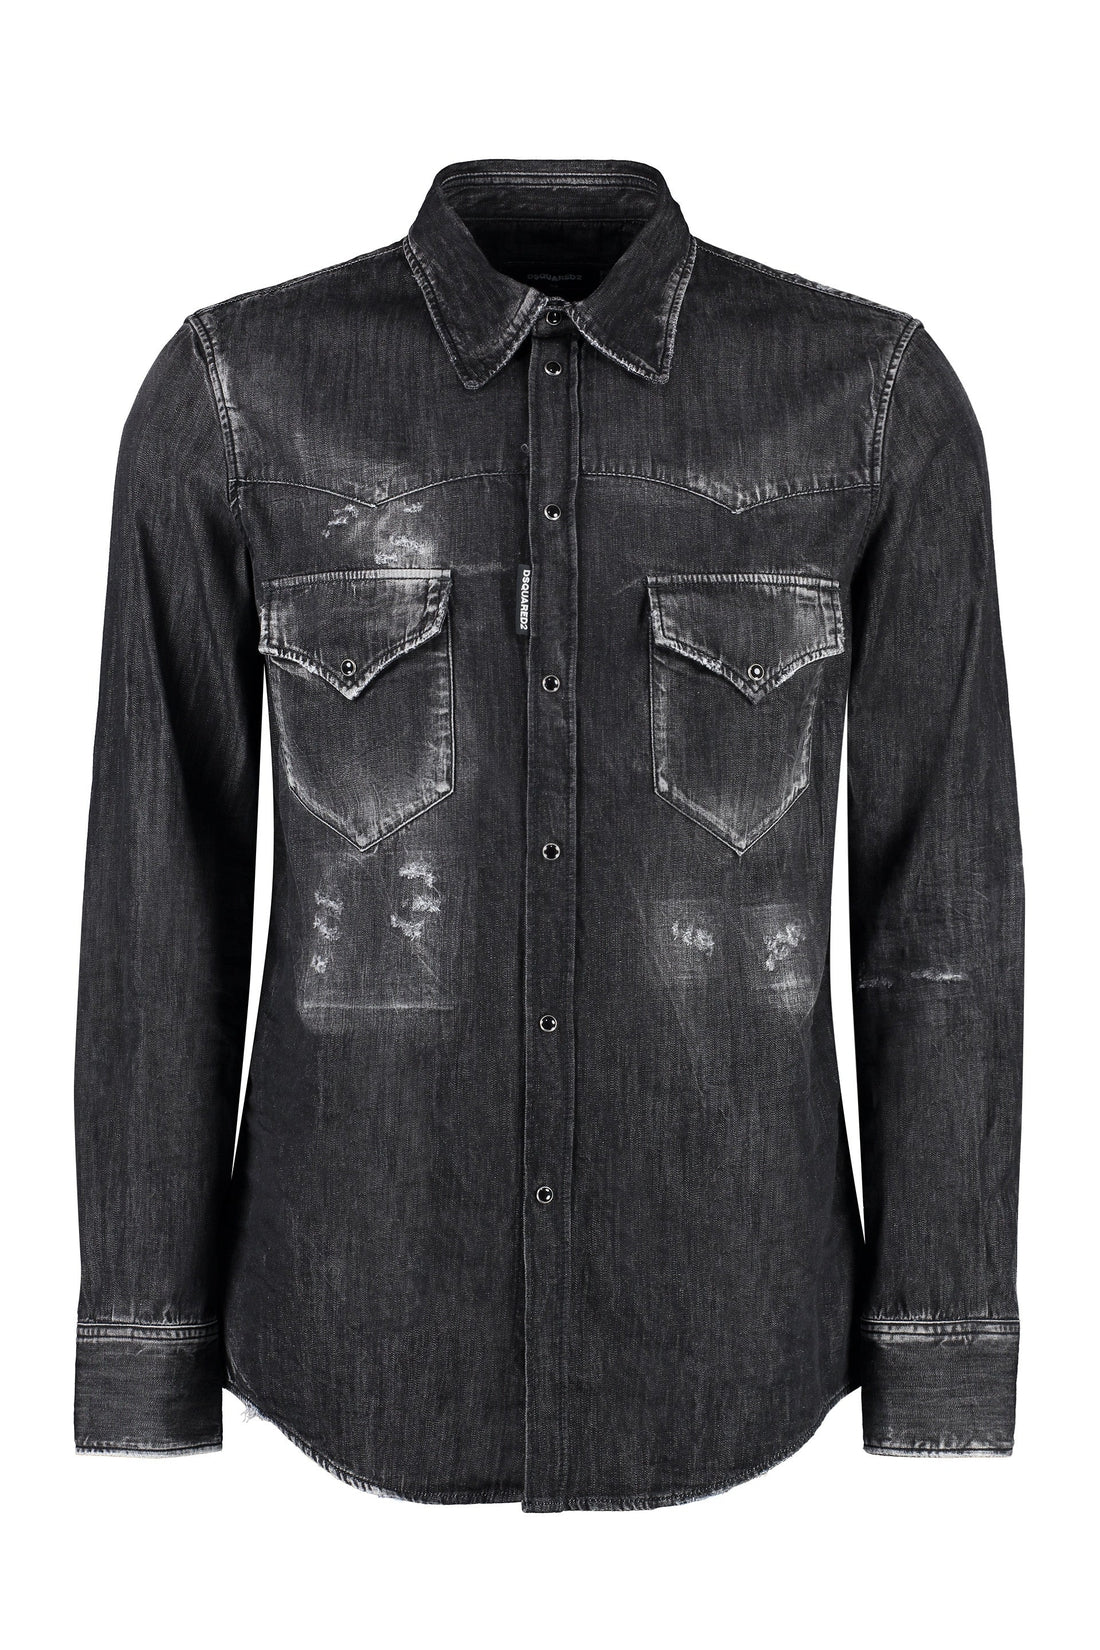 Dsquared2-OUTLET-SALE-Western style denim shirt-ARCHIVIST